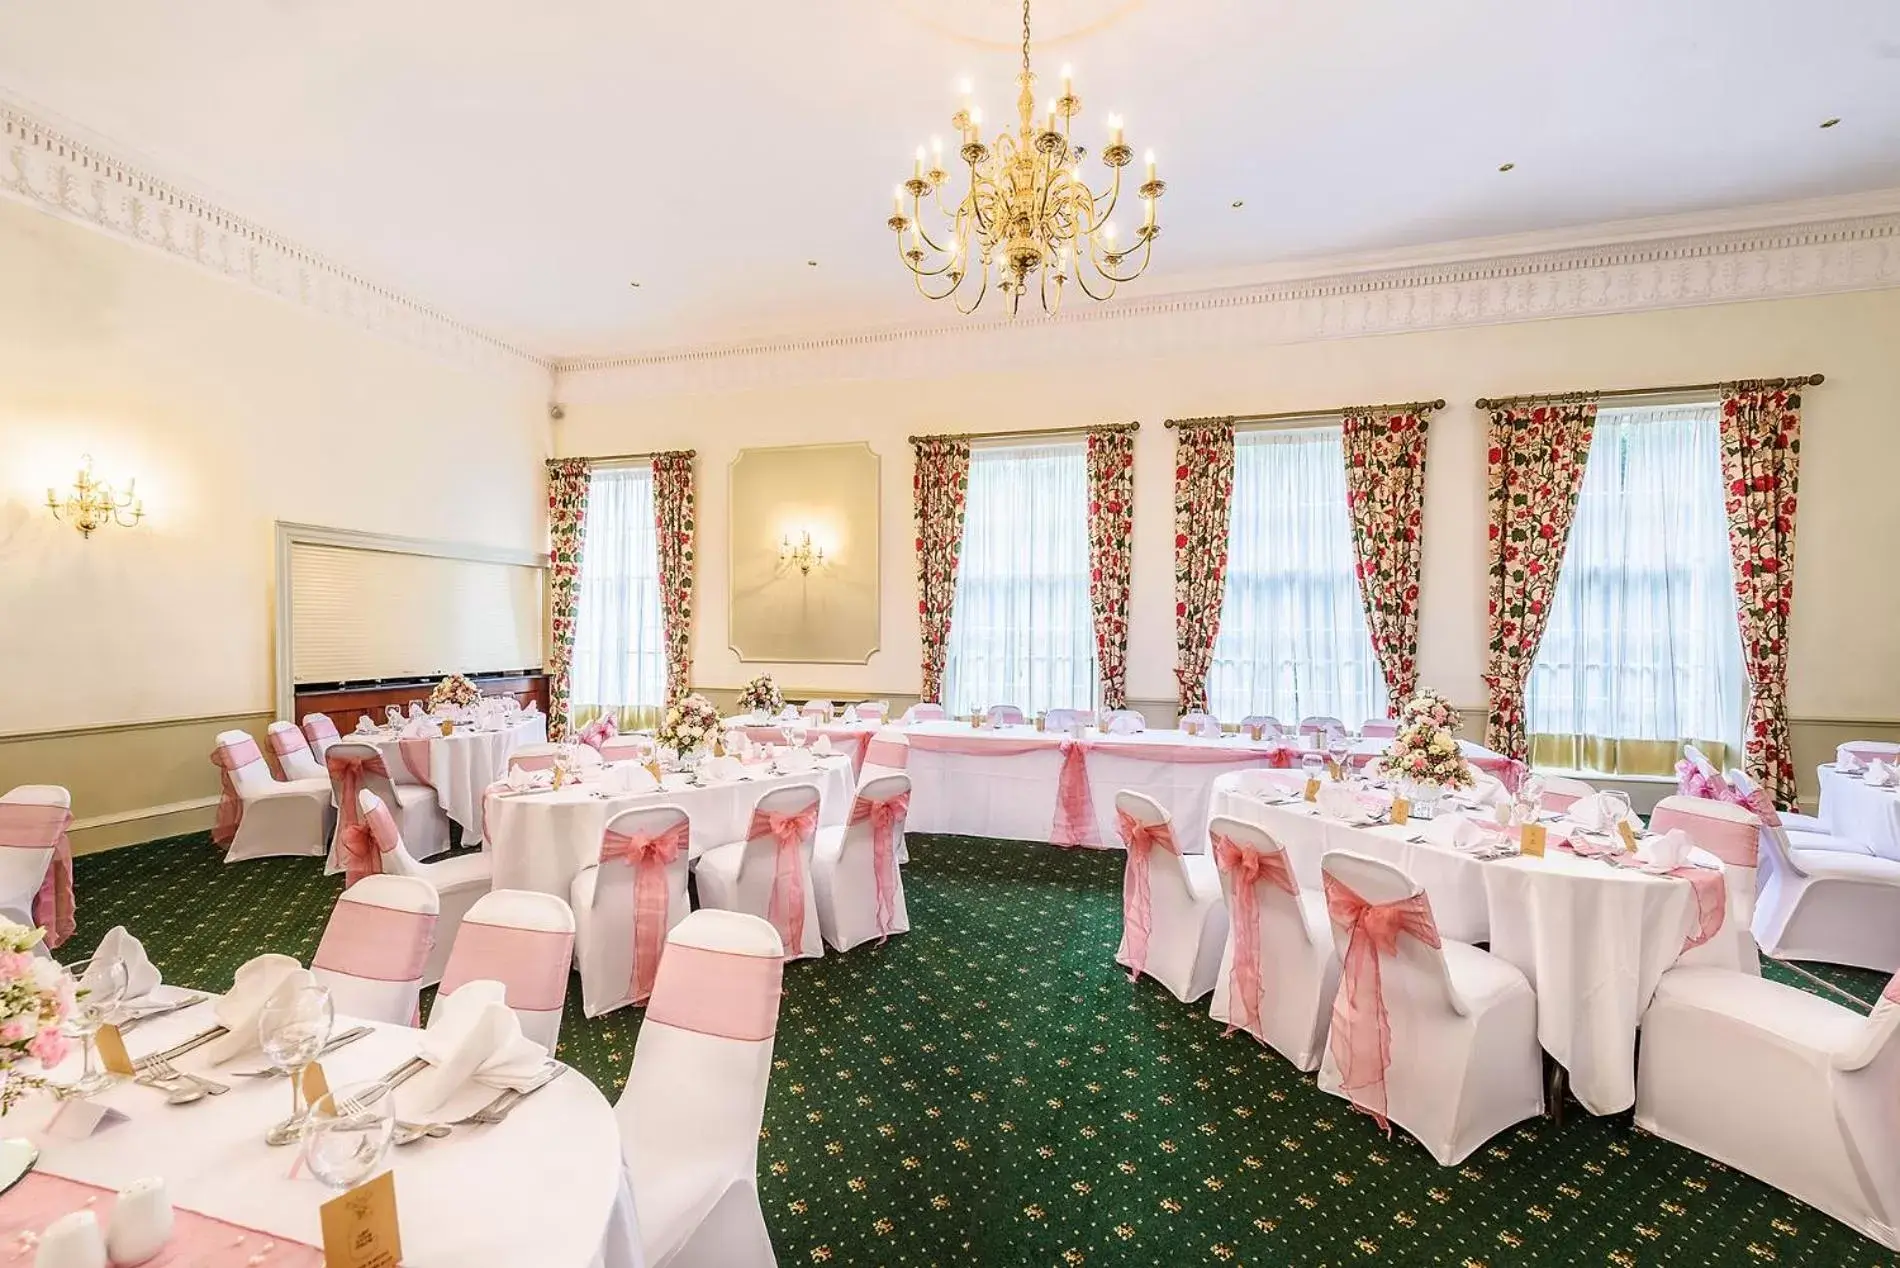 Banquet/Function facilities, Banquet Facilities in Owston Hall Hotel